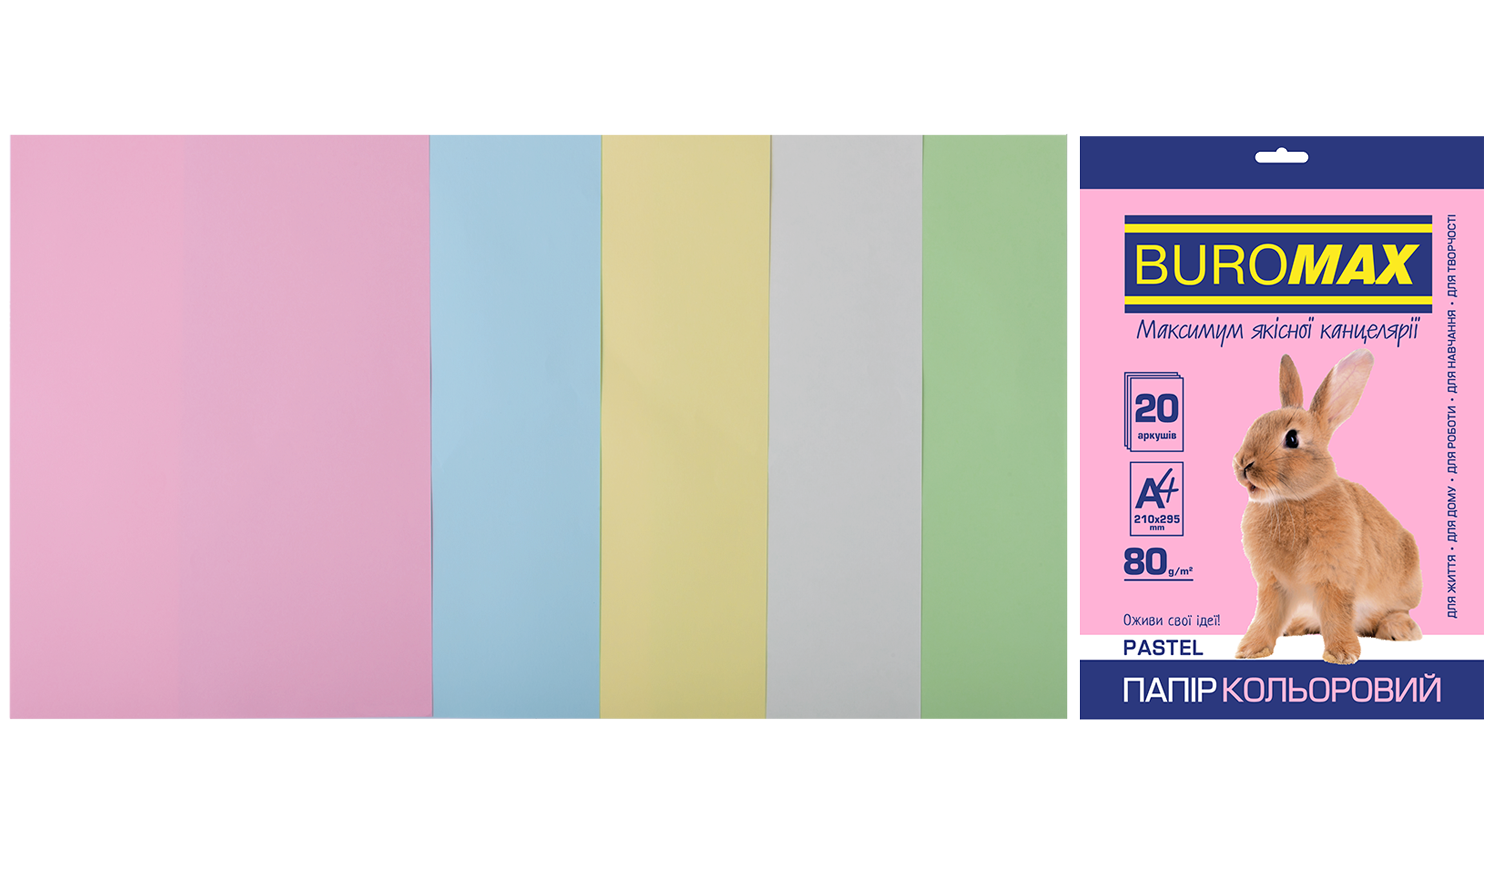 Набор цветной бумаги А4, 80г/м2, PASTEL, 5цв., 20л., Buromax